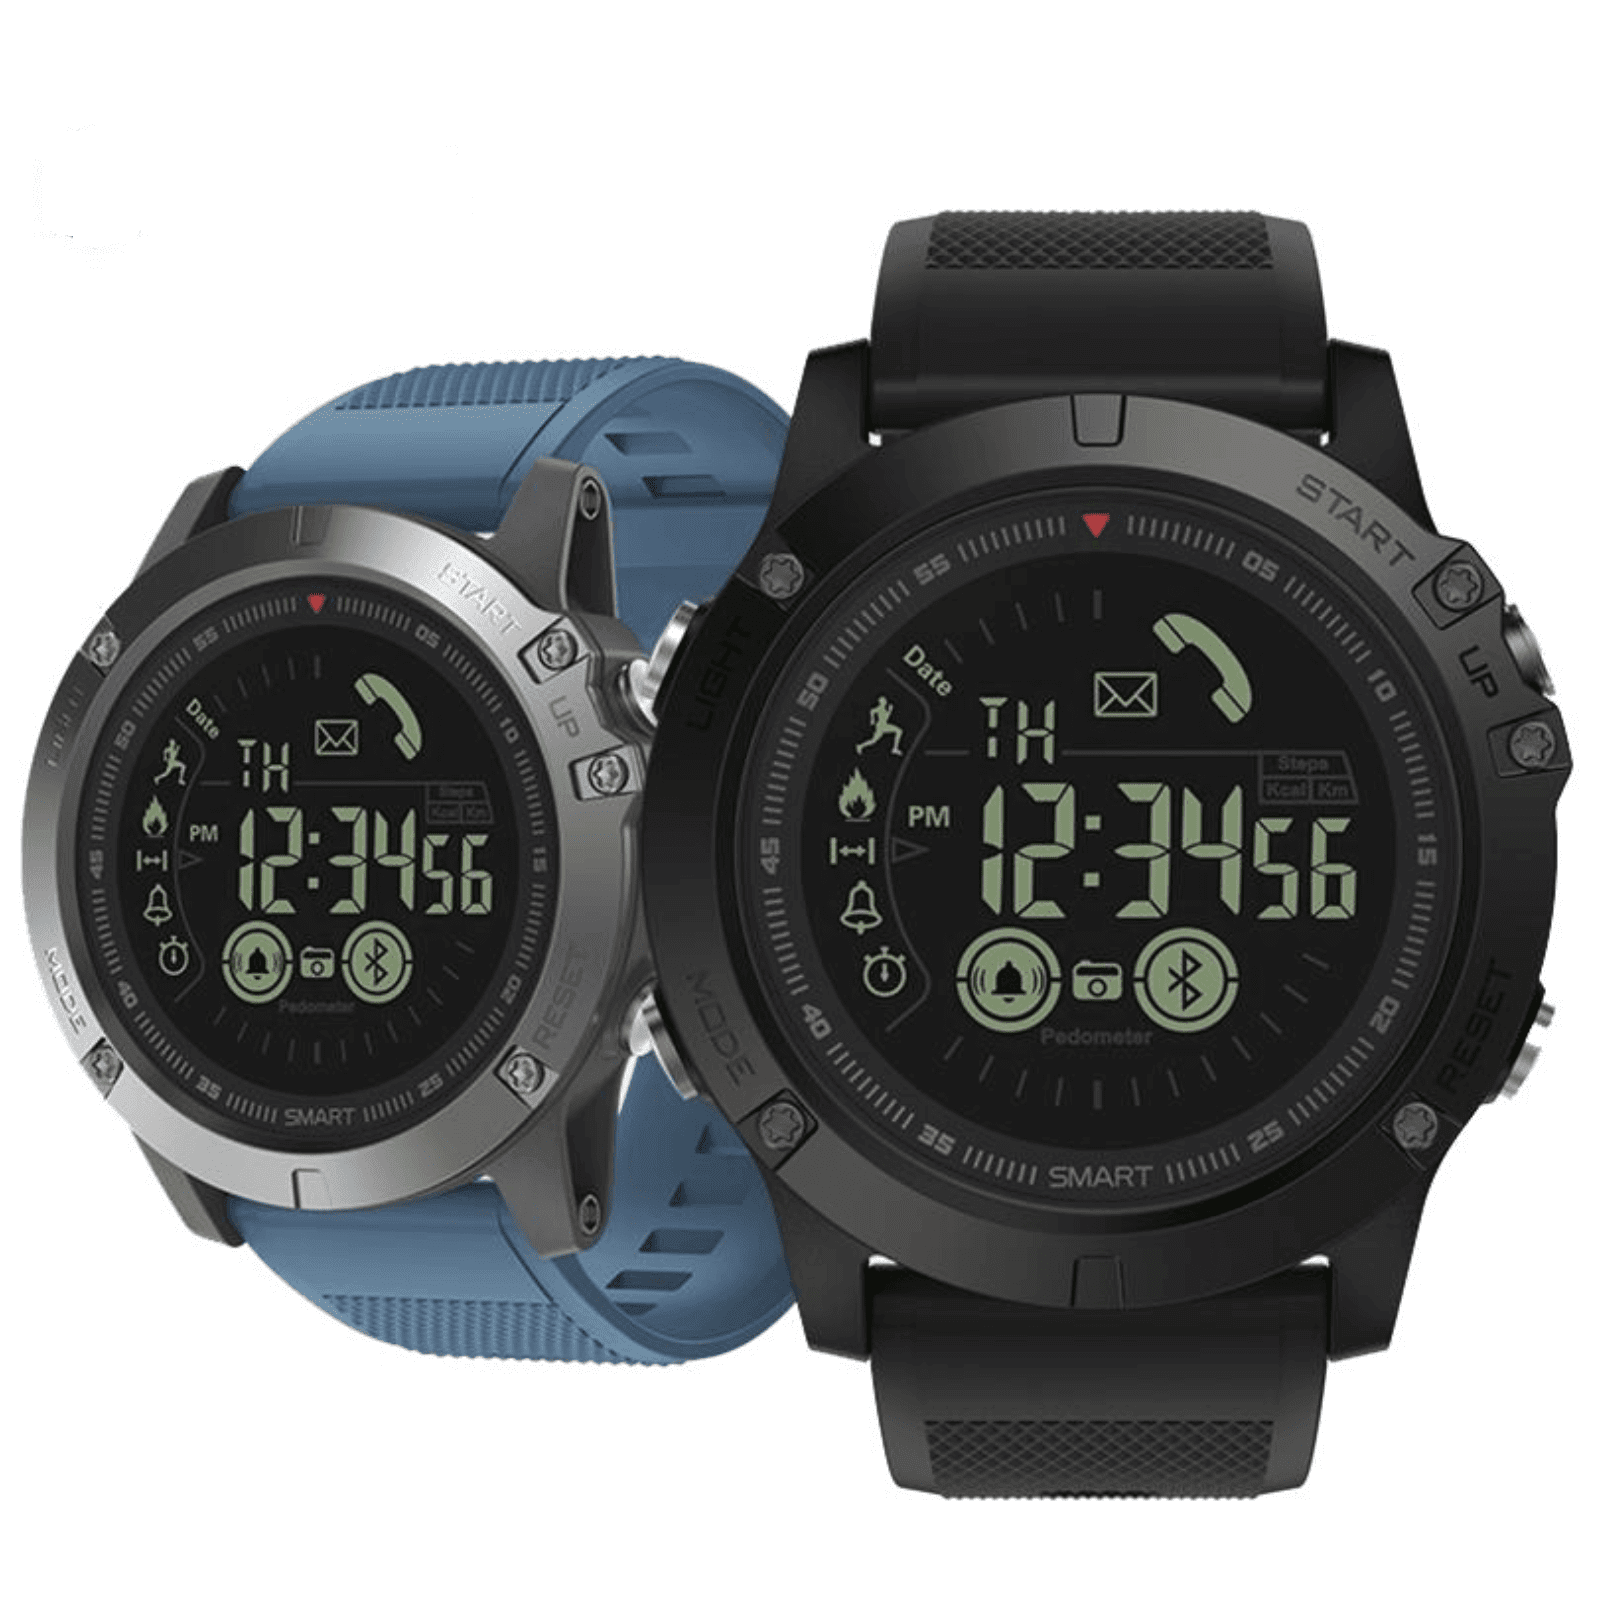 Rugged Smartwatch Fitness Tracker